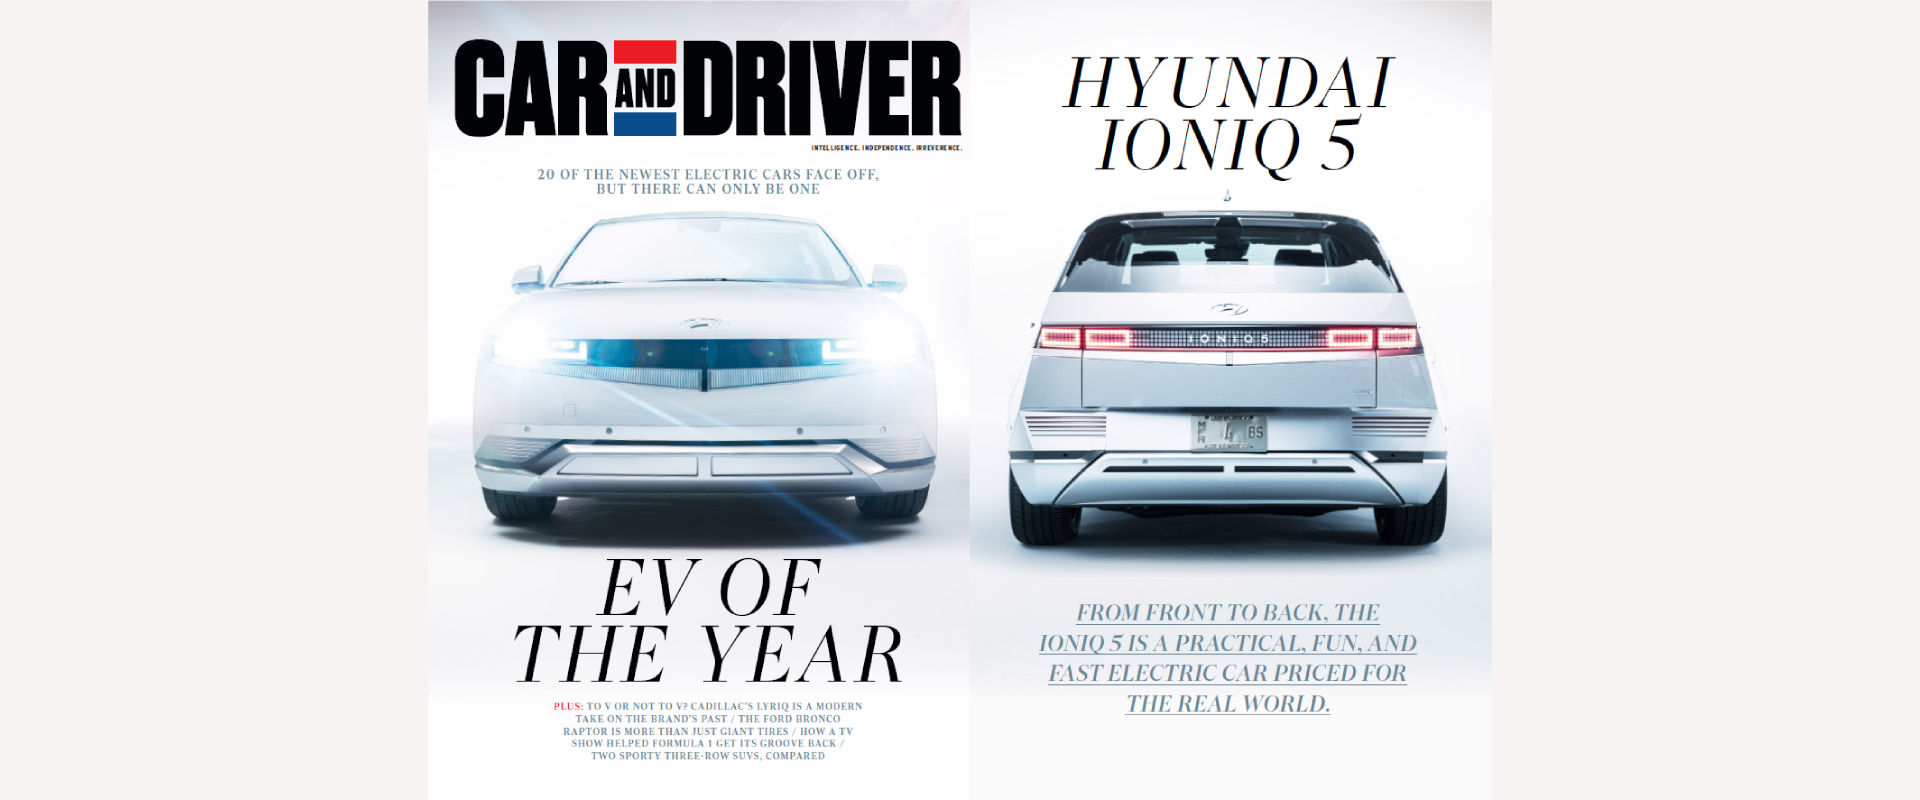 Hyundai IONIQ 5 Wins Car and Driver’s 2022 EV of the Year Award